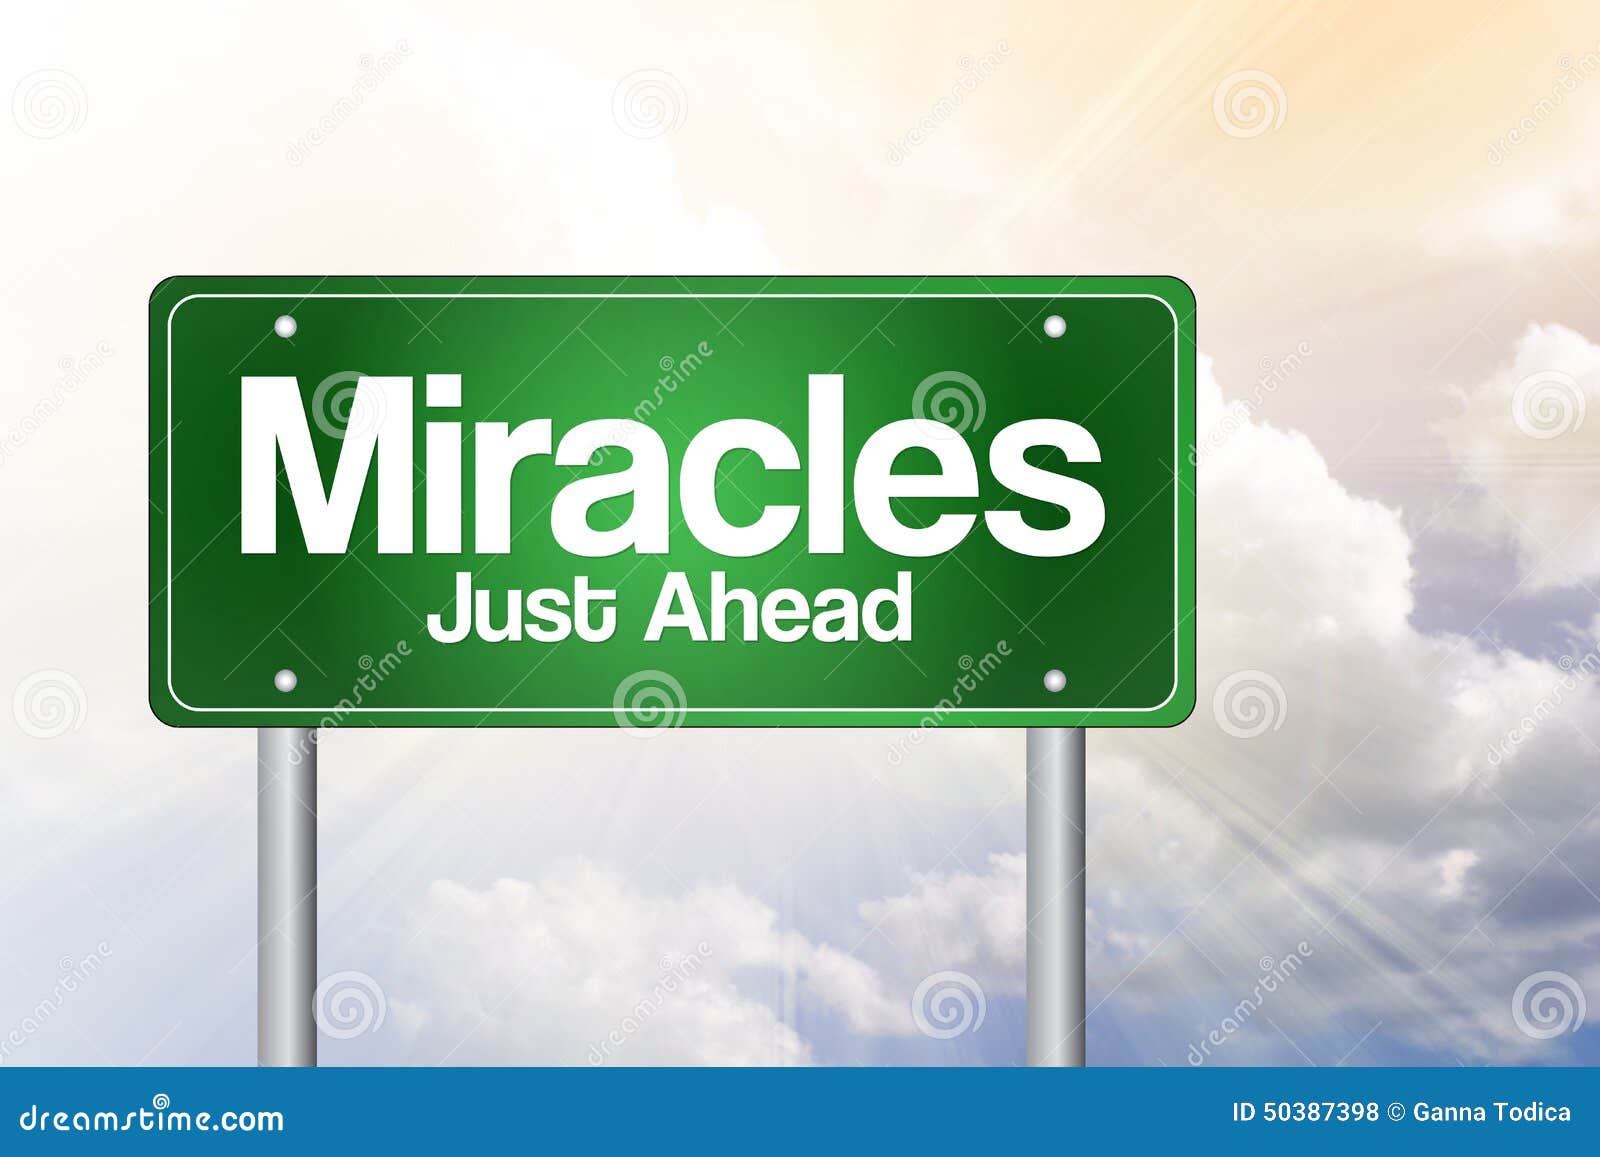 miracles green road sign